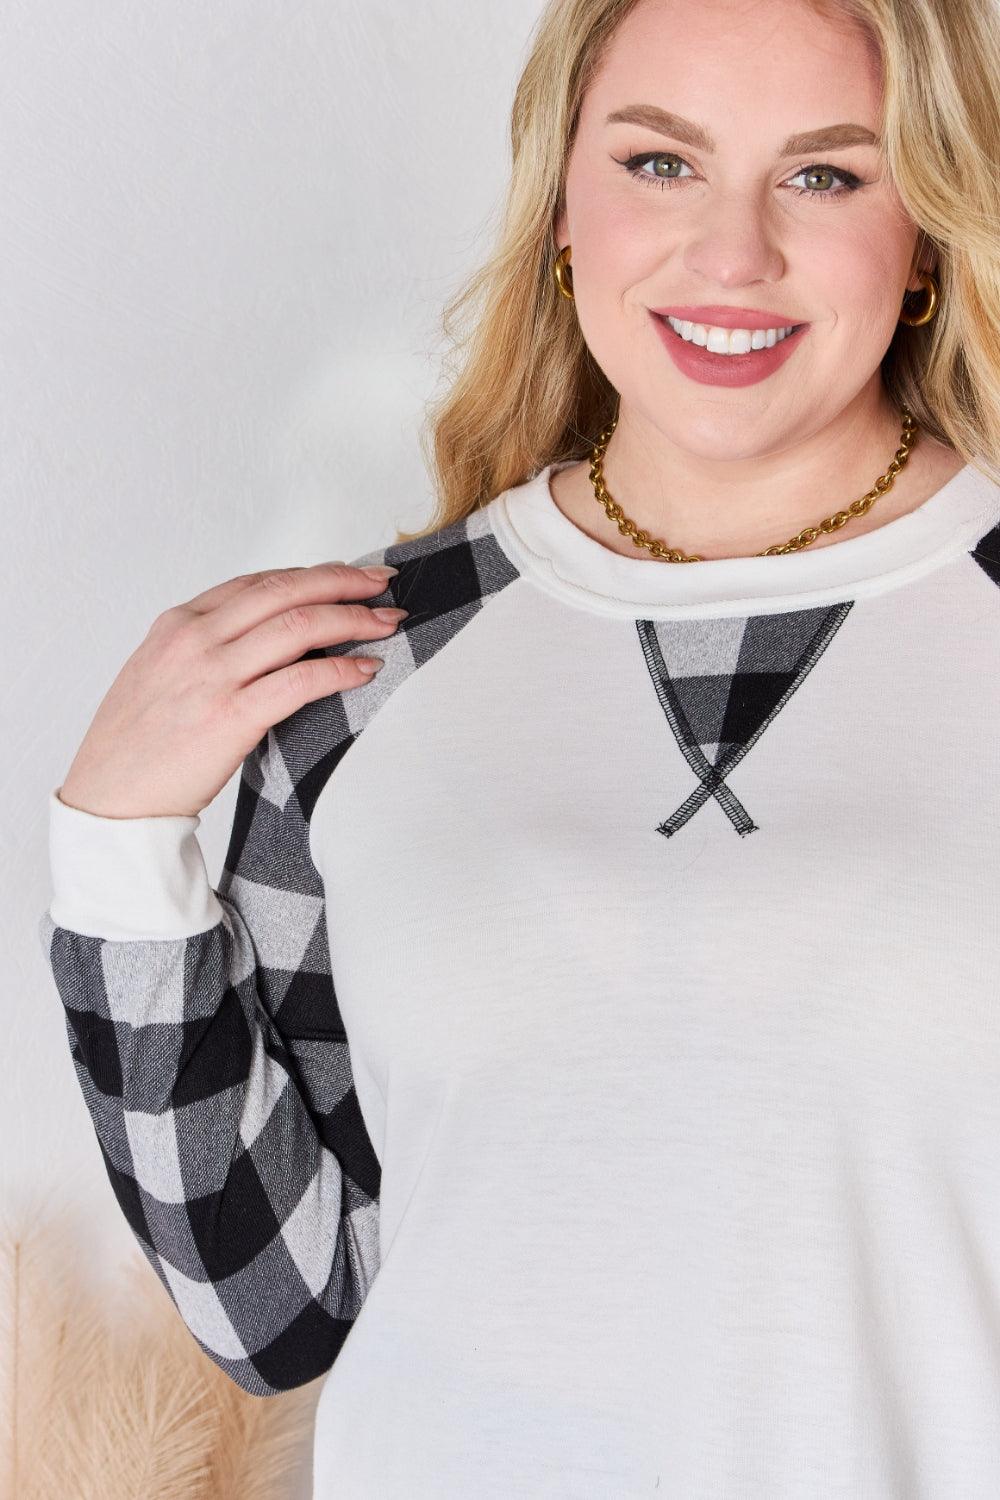 Women's Shirts Hailey & Co Full Size Plaid Raglan Sleeve Round Neck Blouse